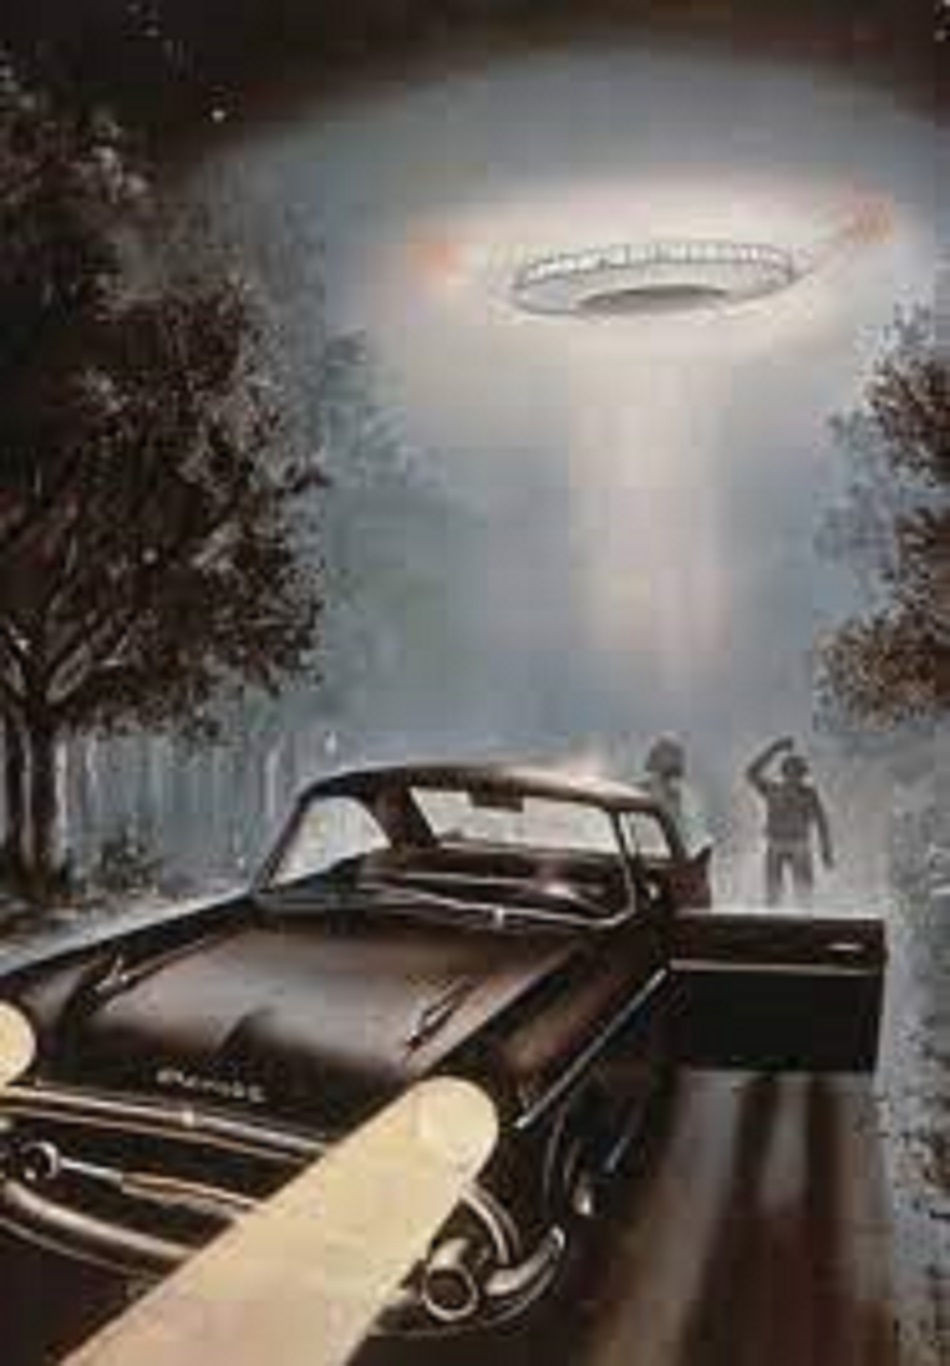 A depiction of alien abduction over a car